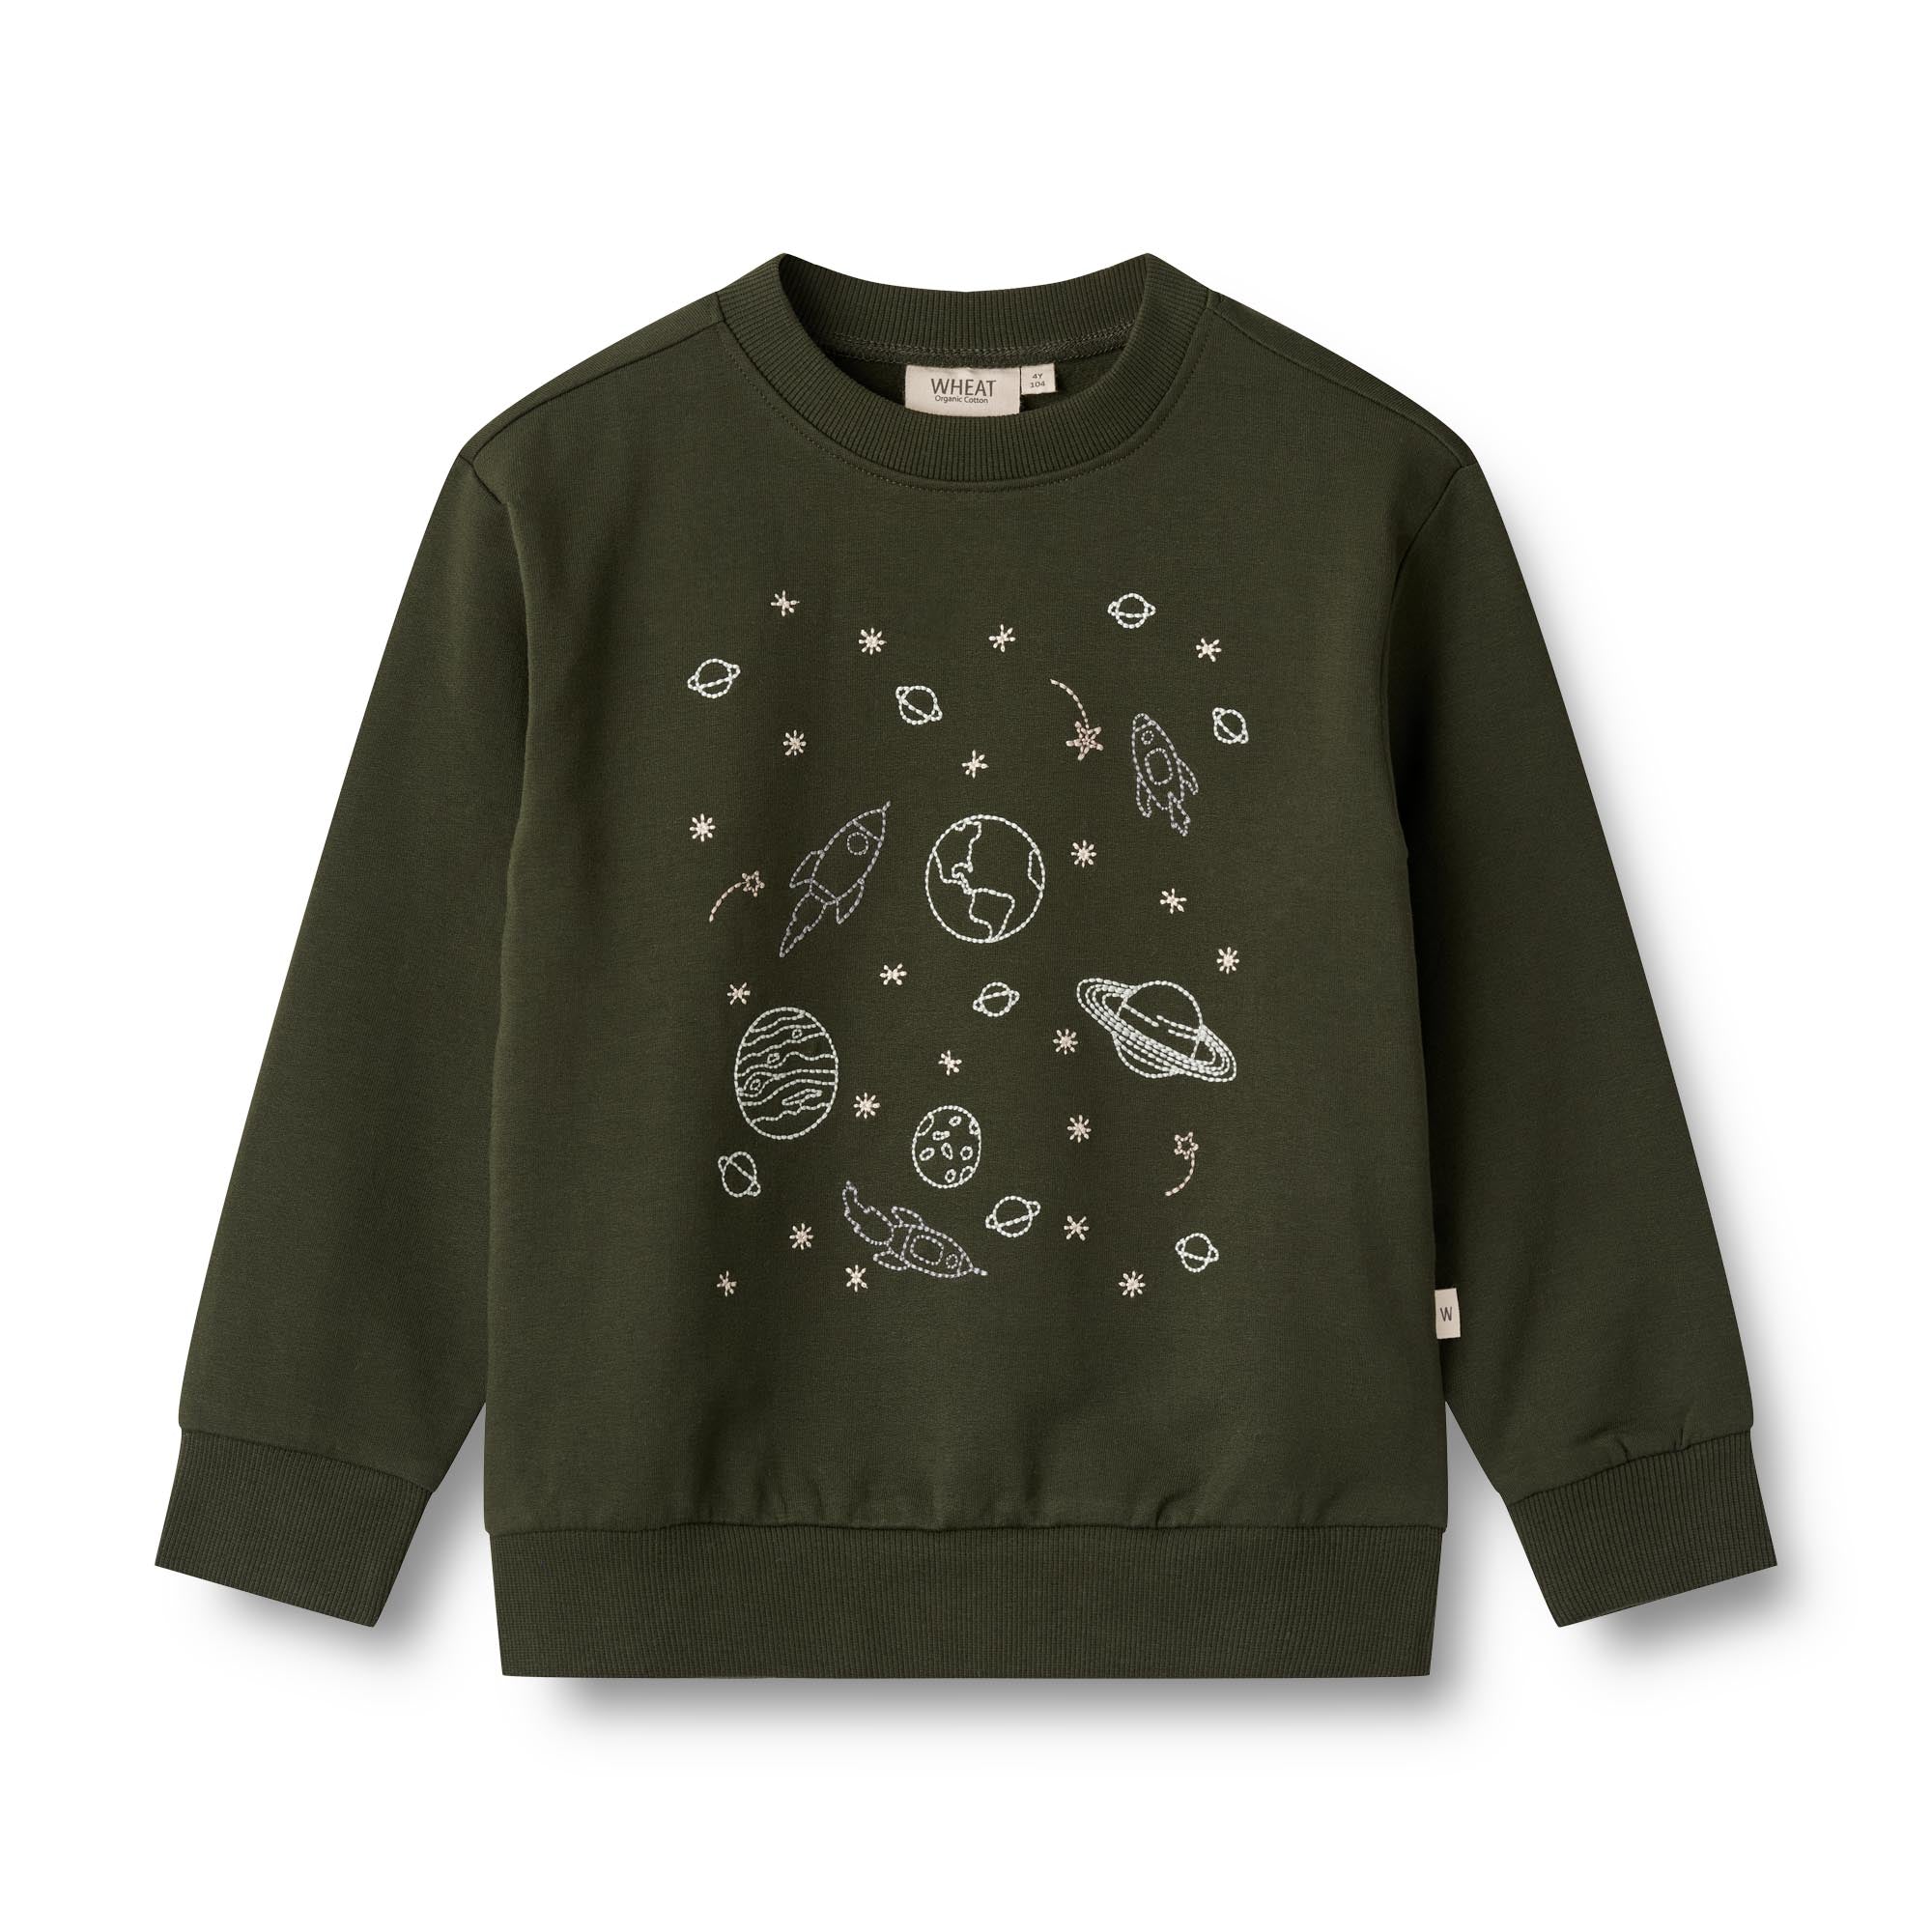 Wheat Sweatshirt Space Embroidery